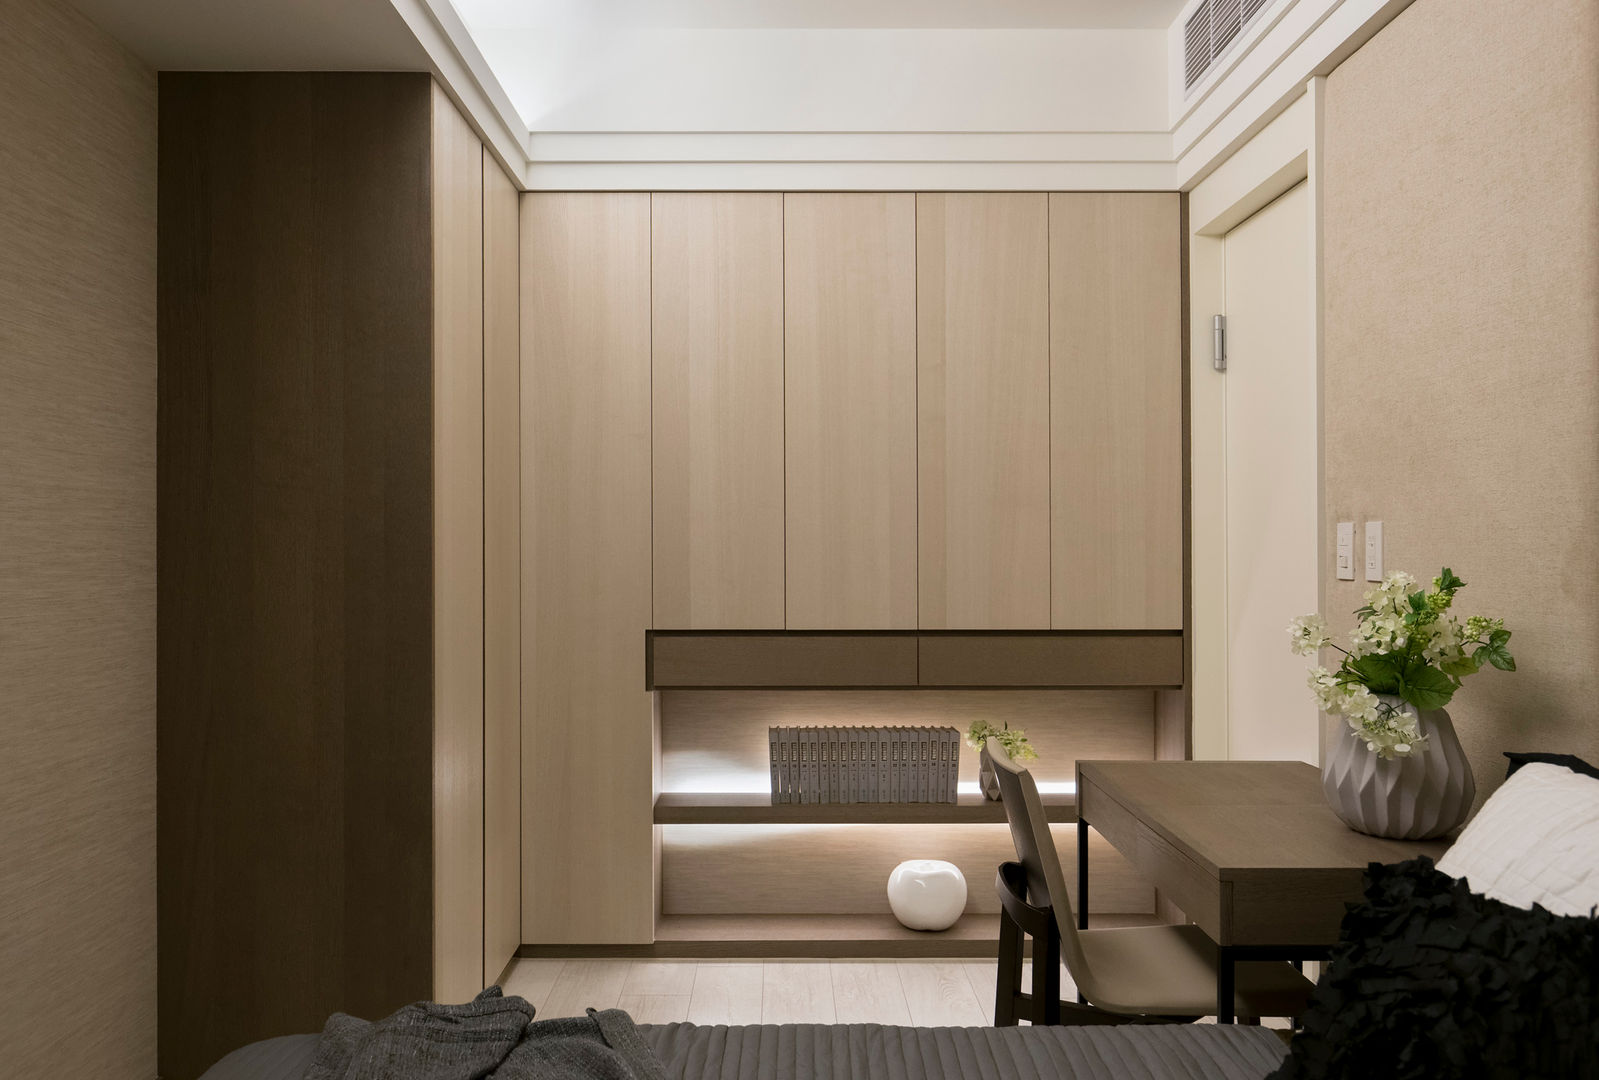 私宅-綠溢, 思為設計 SW Design 思為設計 SW Design Scandinavische slaapkamers